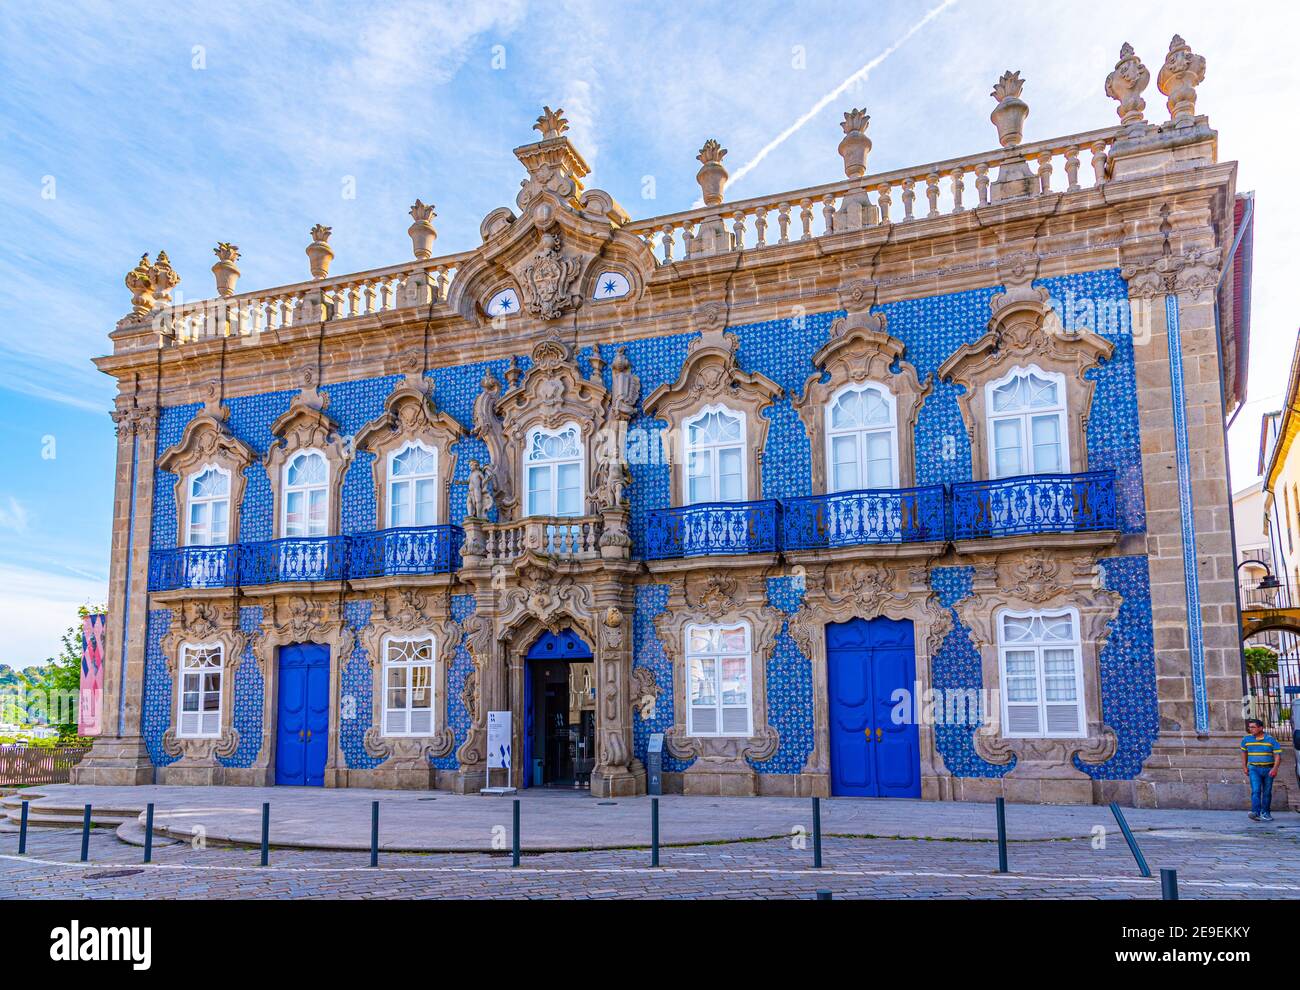 Palacio do Raio in Braga, Portugal Stock Photo - Alamy